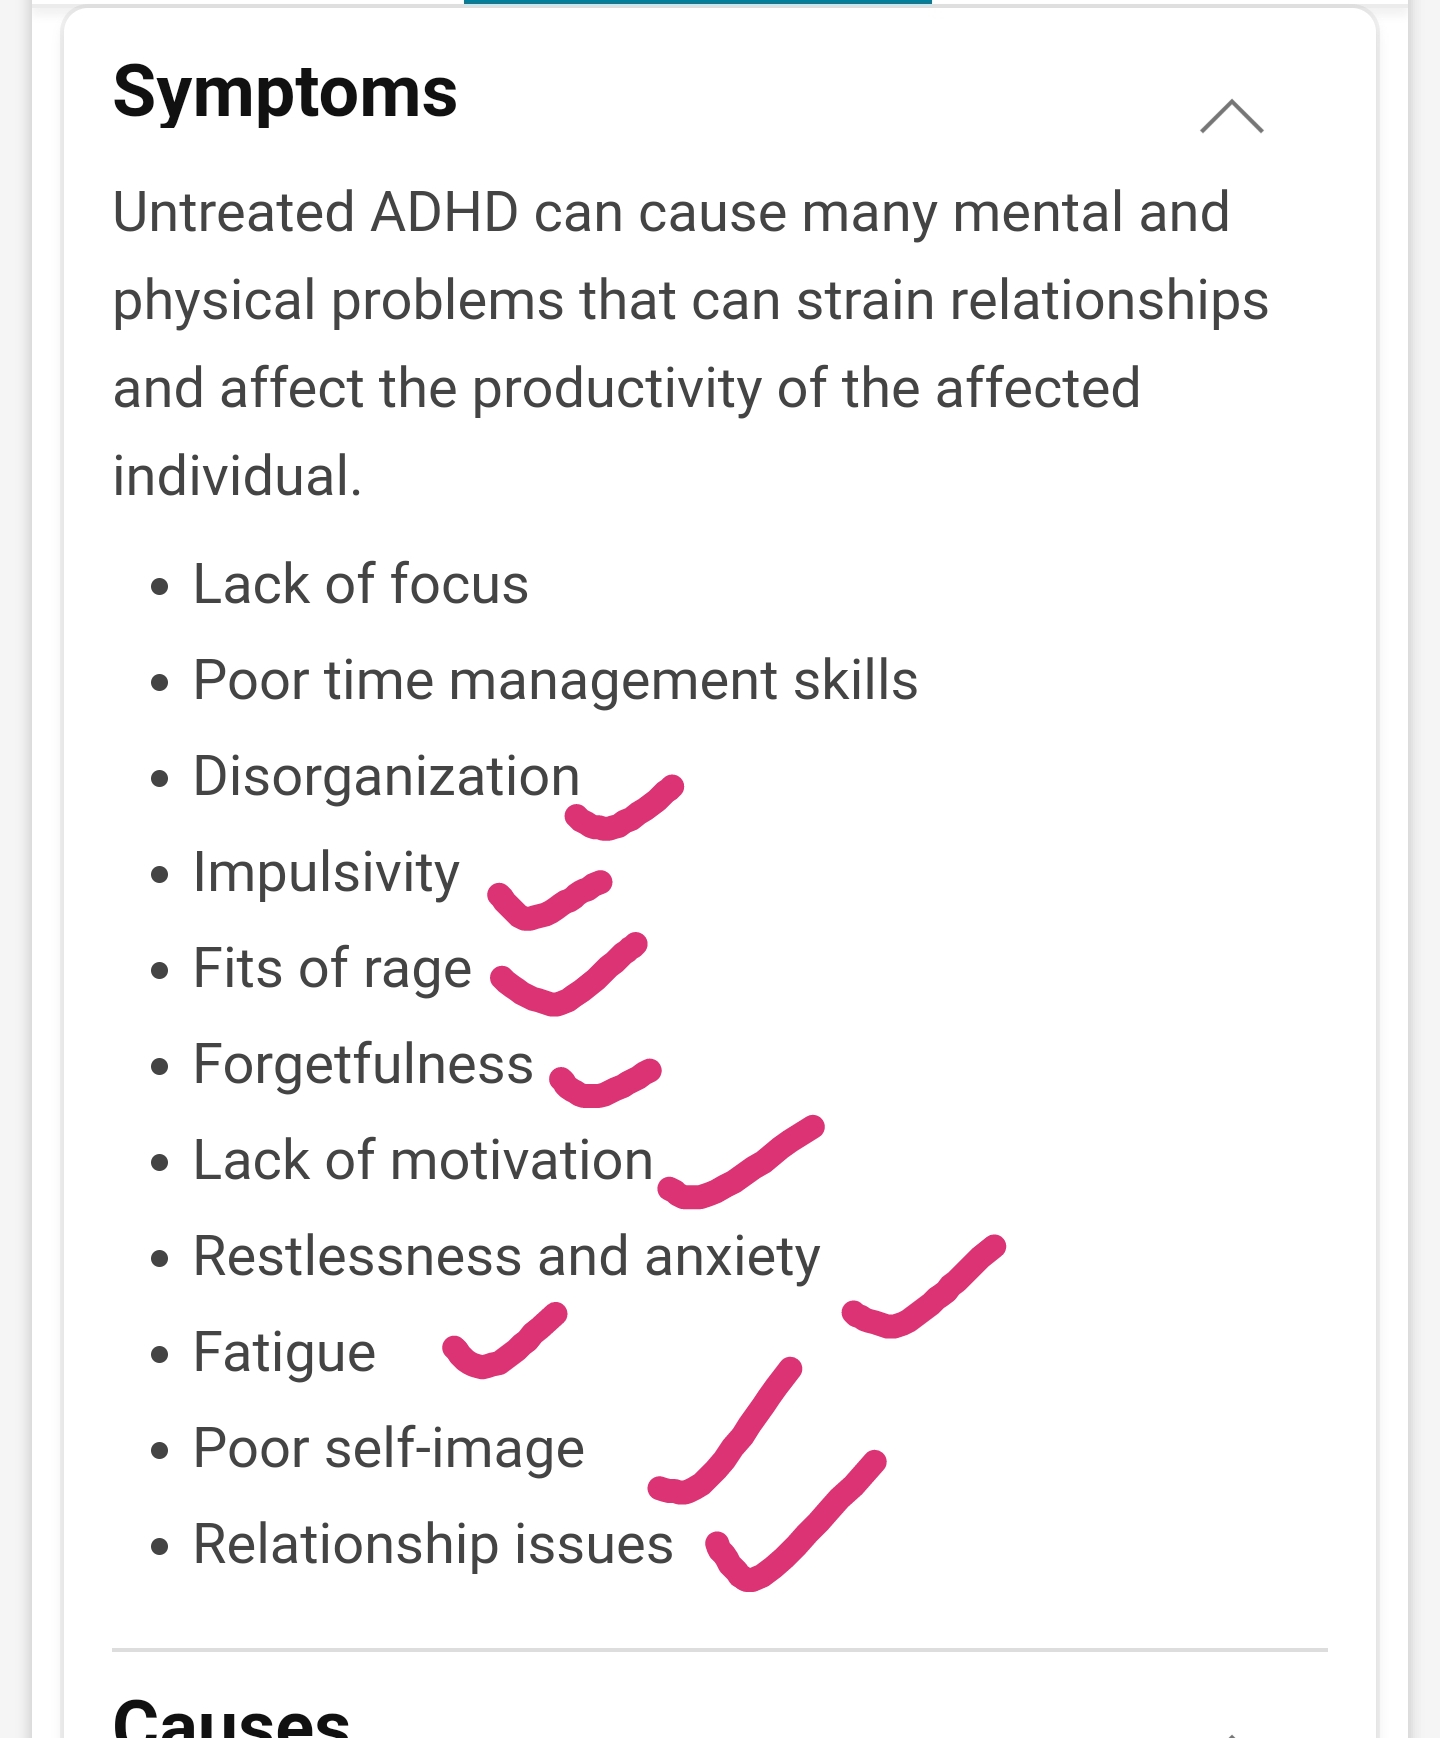 Raging ADHD 